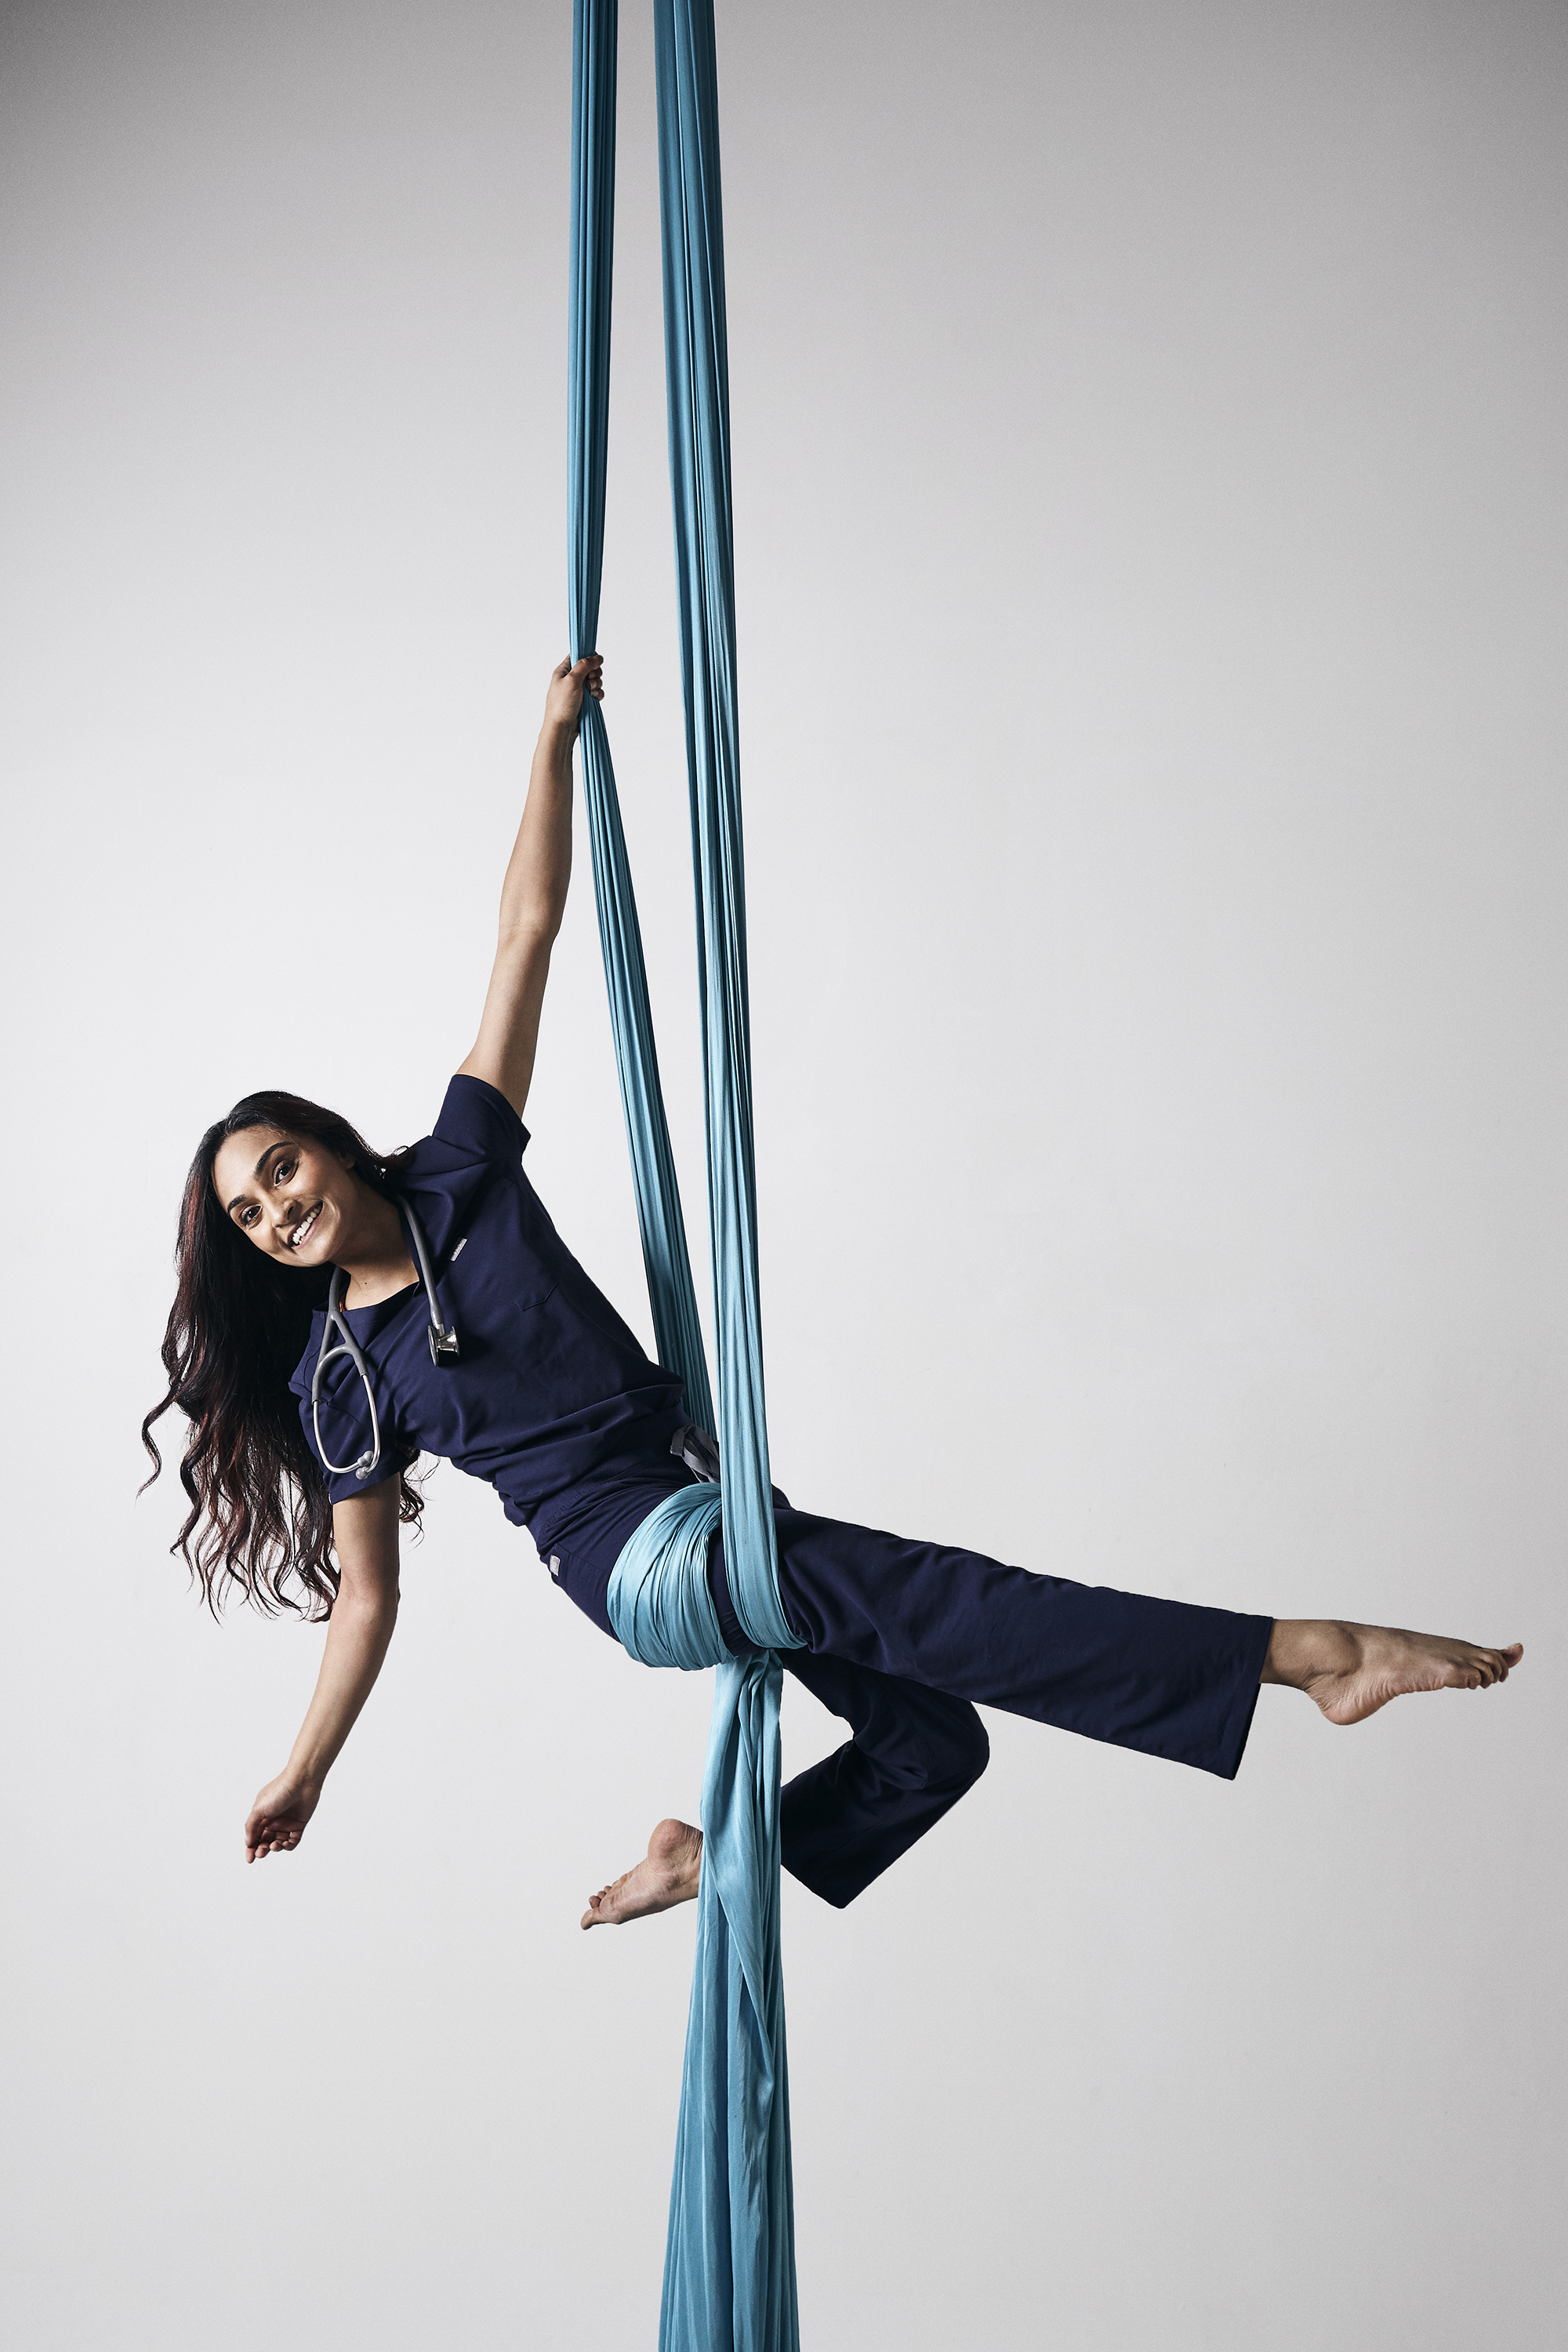 Ranjita Raghavan performing aerial acrobatics in scrubs.